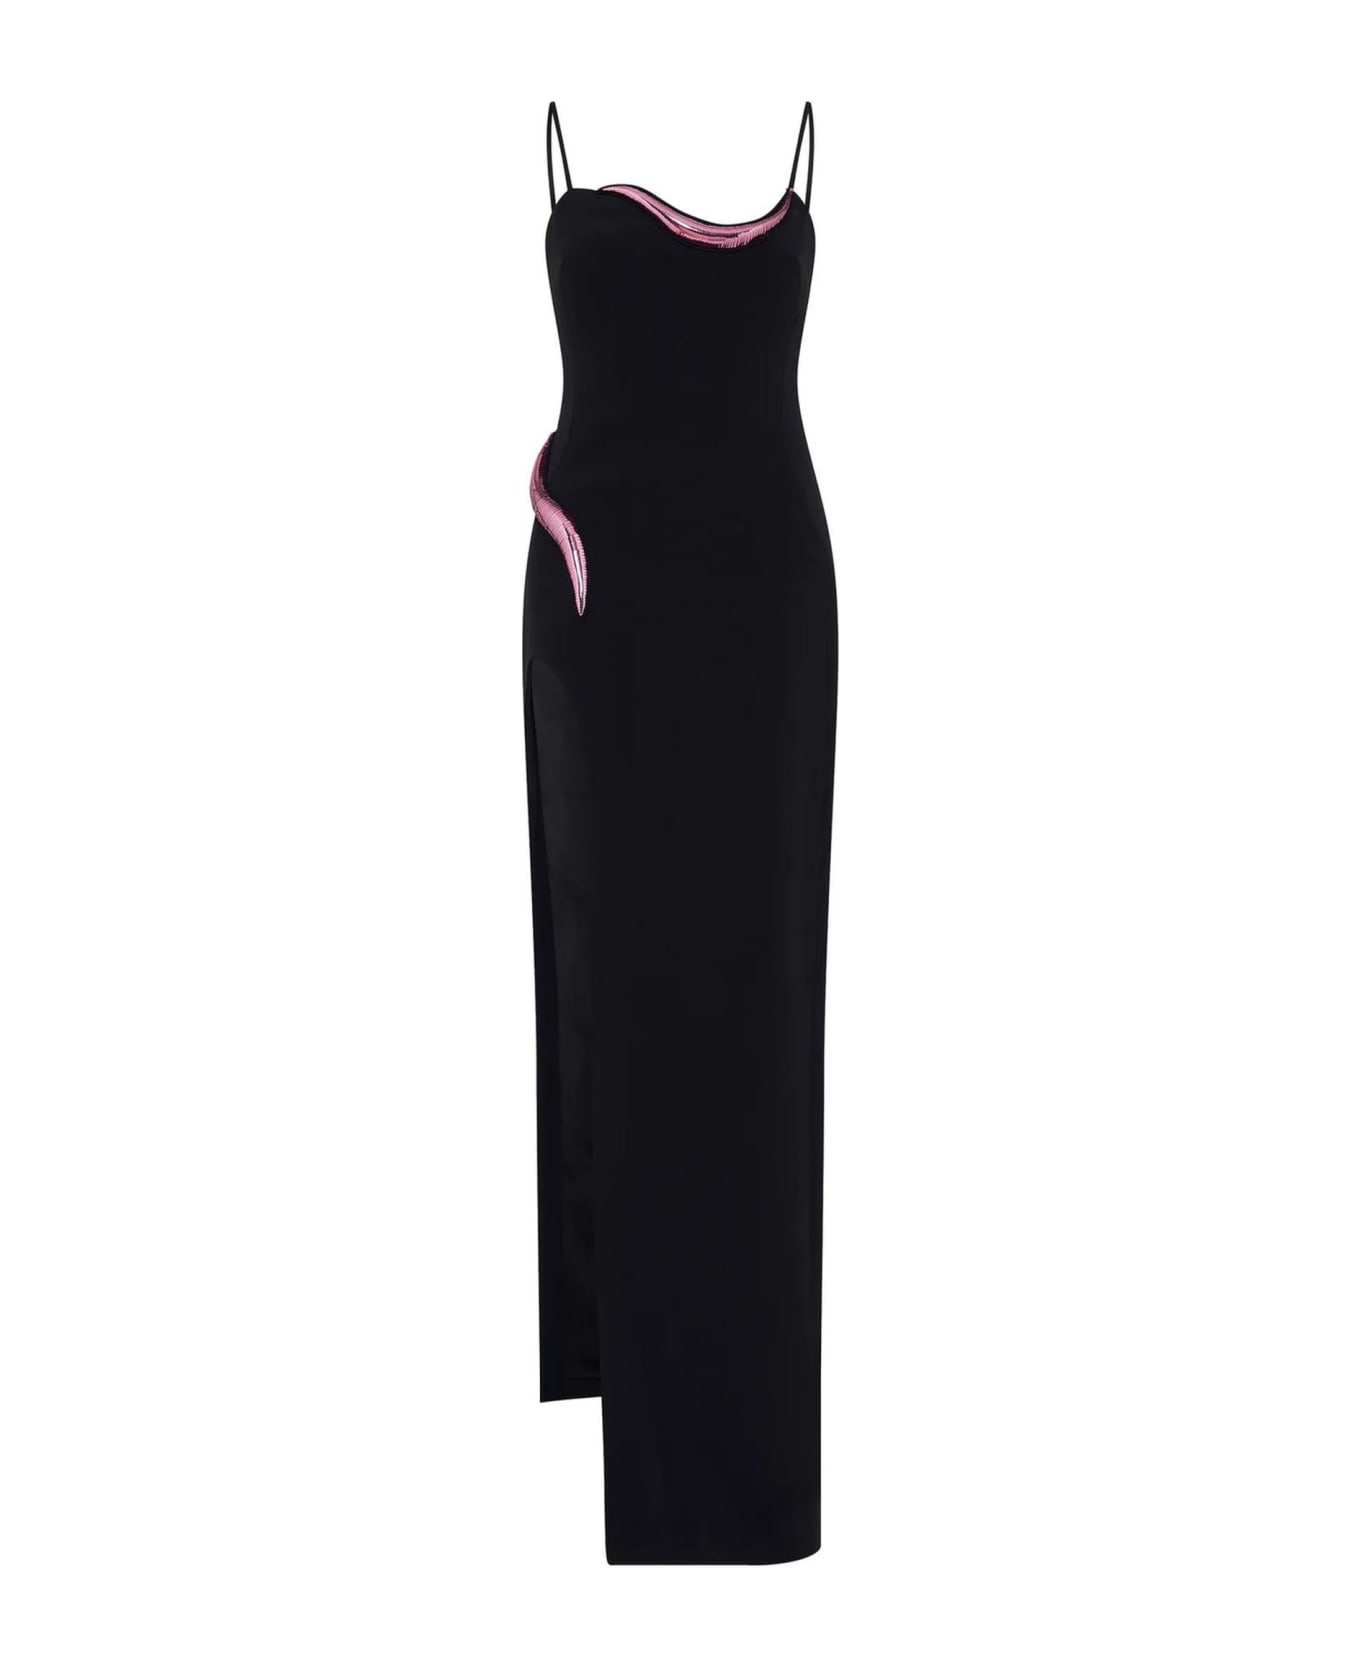 David Koma Dresses Black - Black Pink